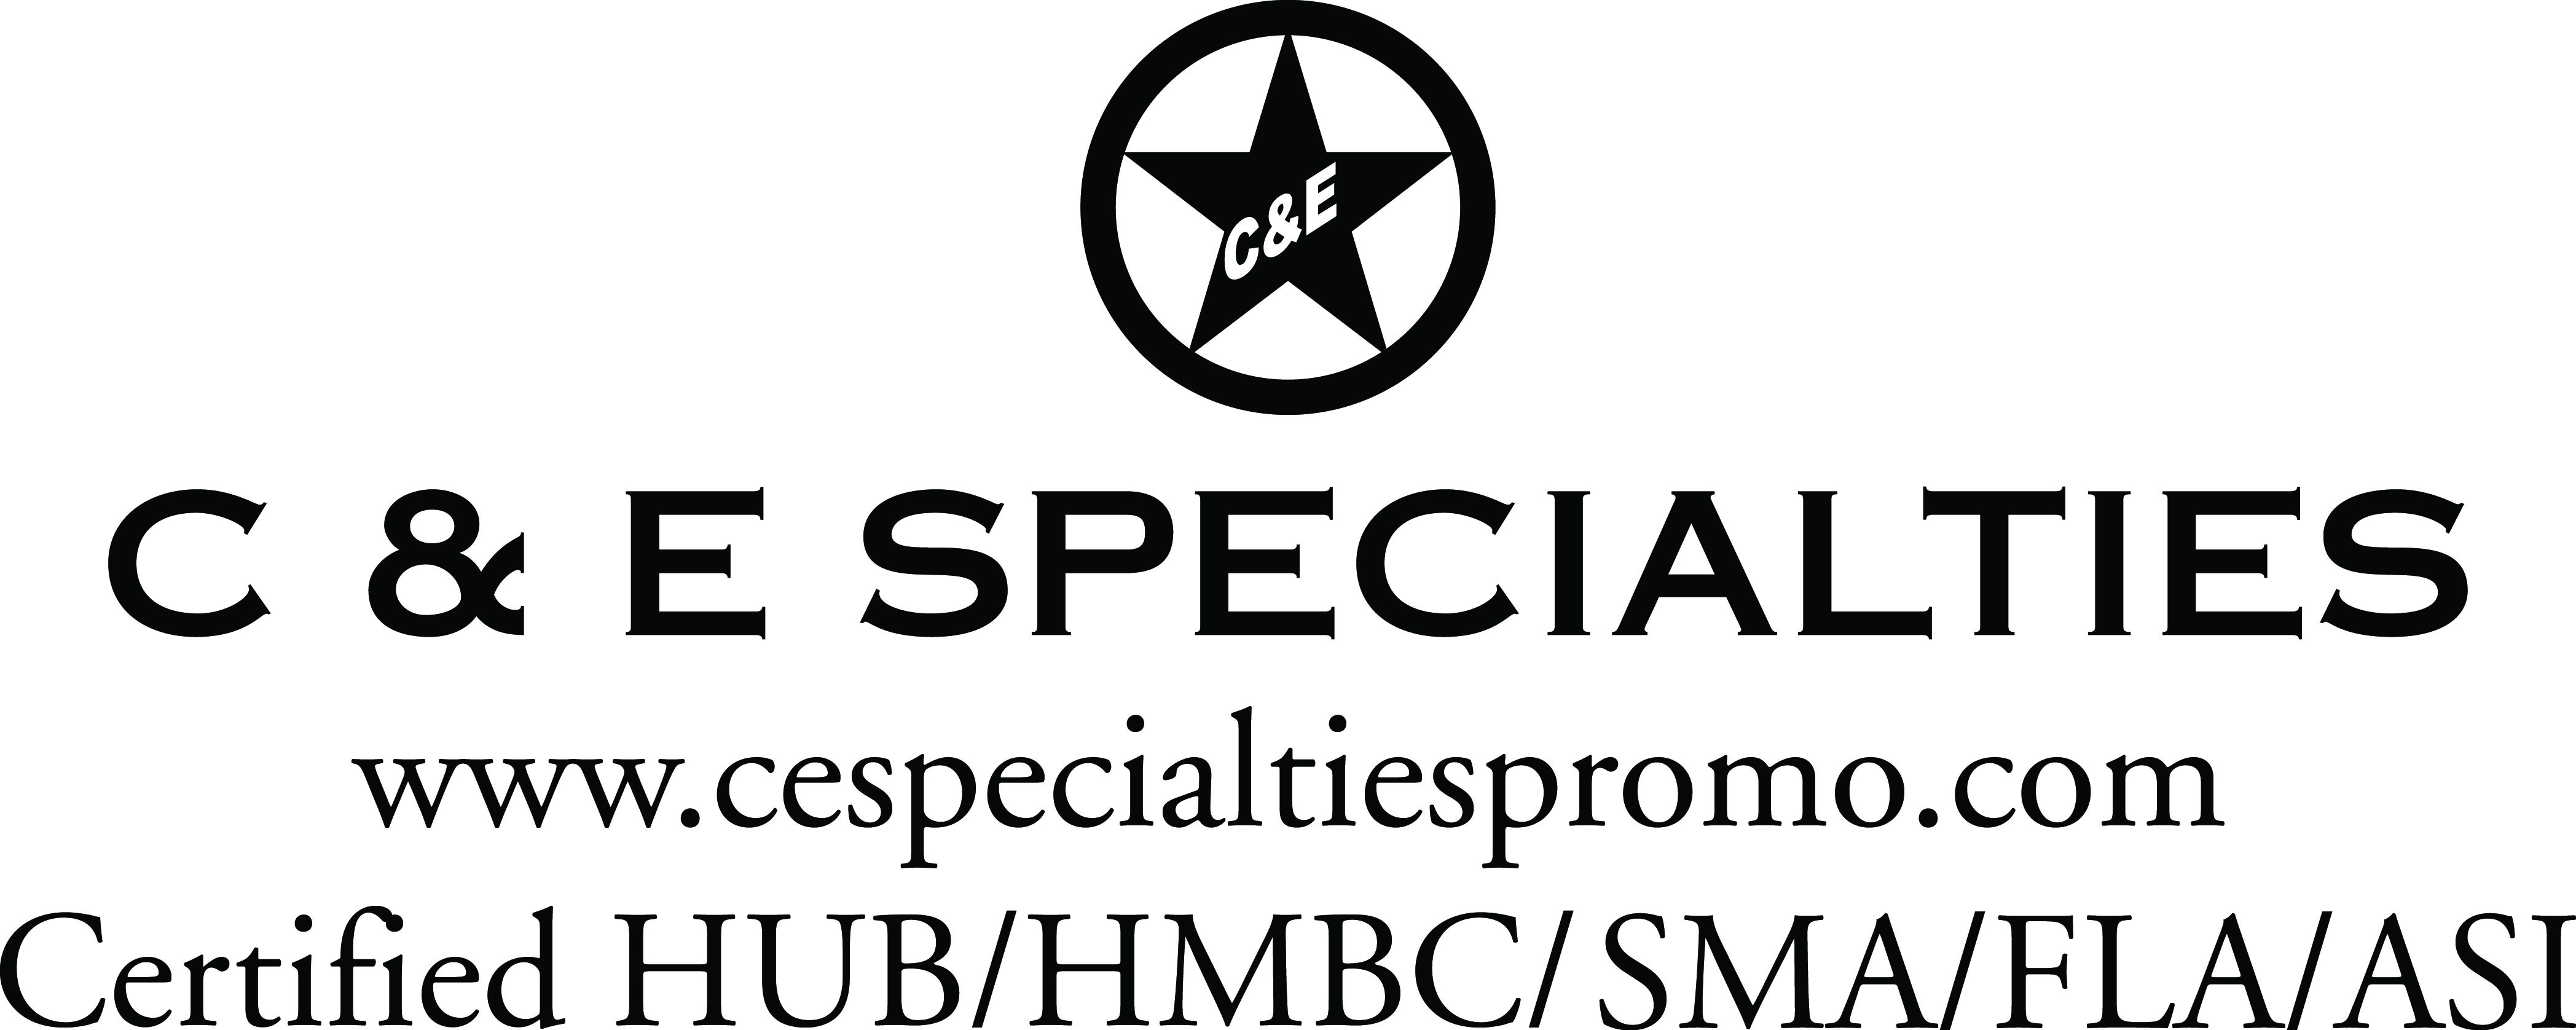 C & E Specialties's Logo